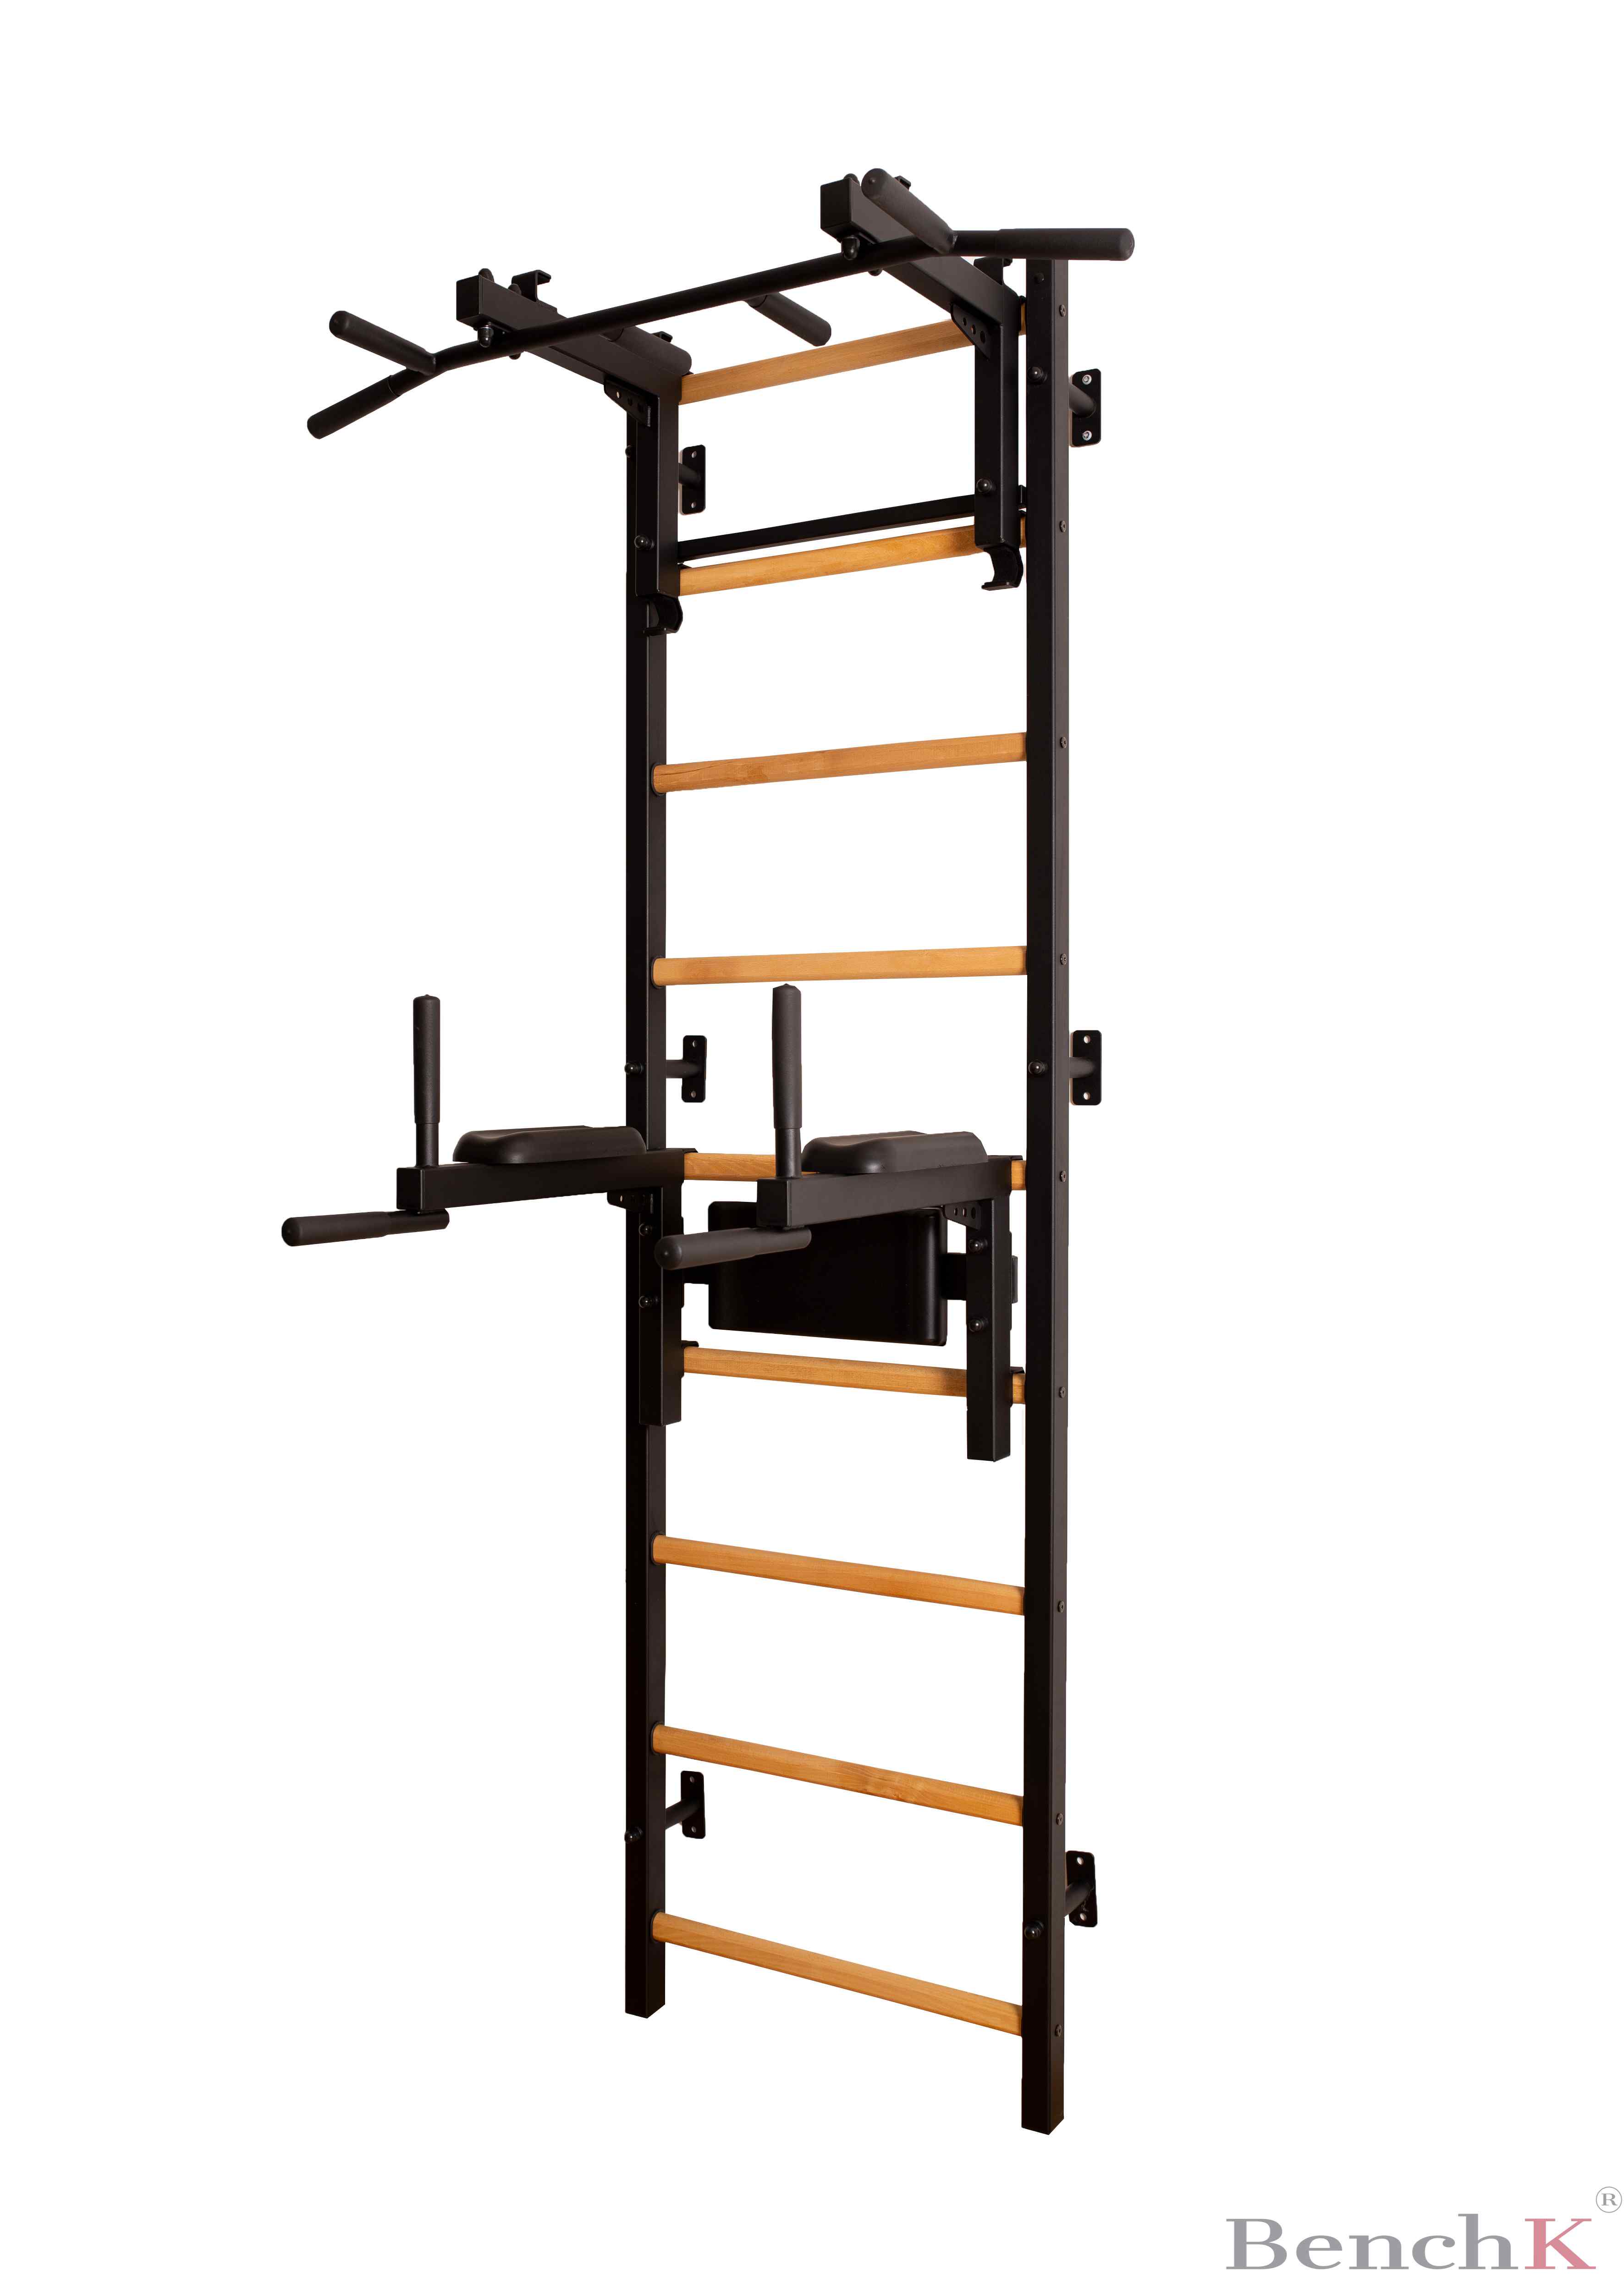 BenchK 732 Wall Bars with Convertible Pull Up Bar & Dip Bar Swedish Ladder Home Gym Equipment